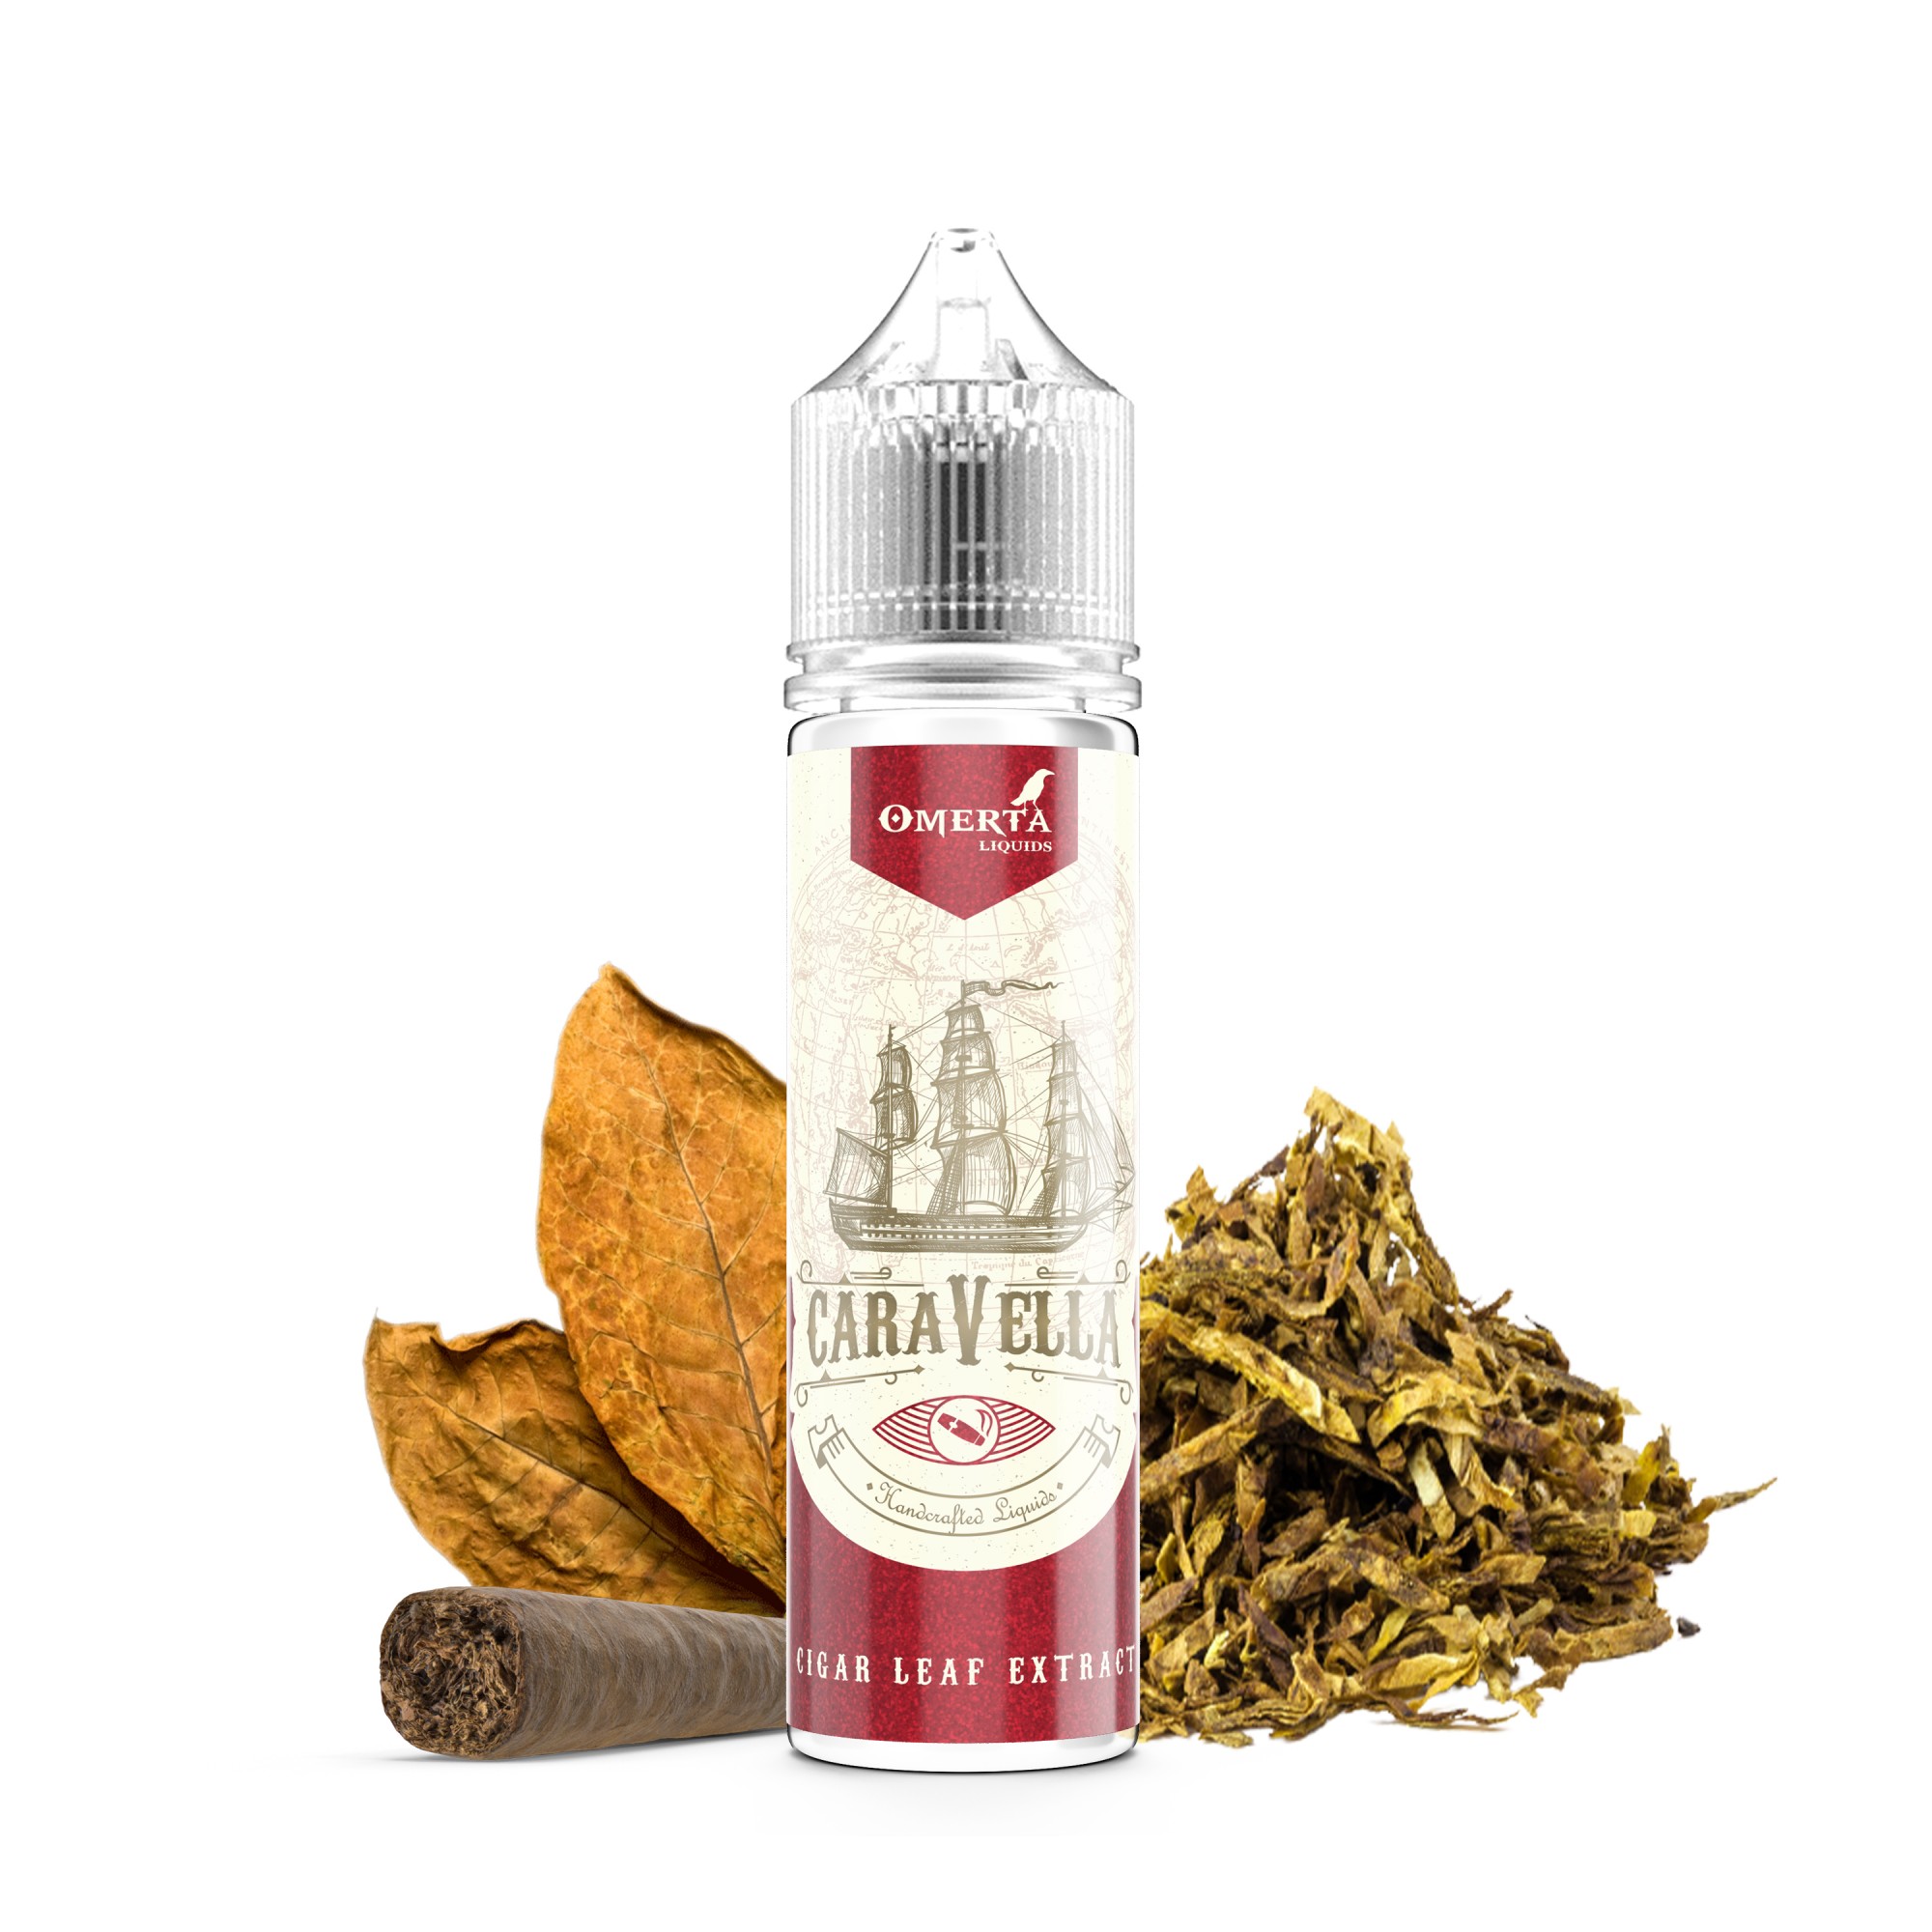 Caravella Cigar Leaf Extract 60